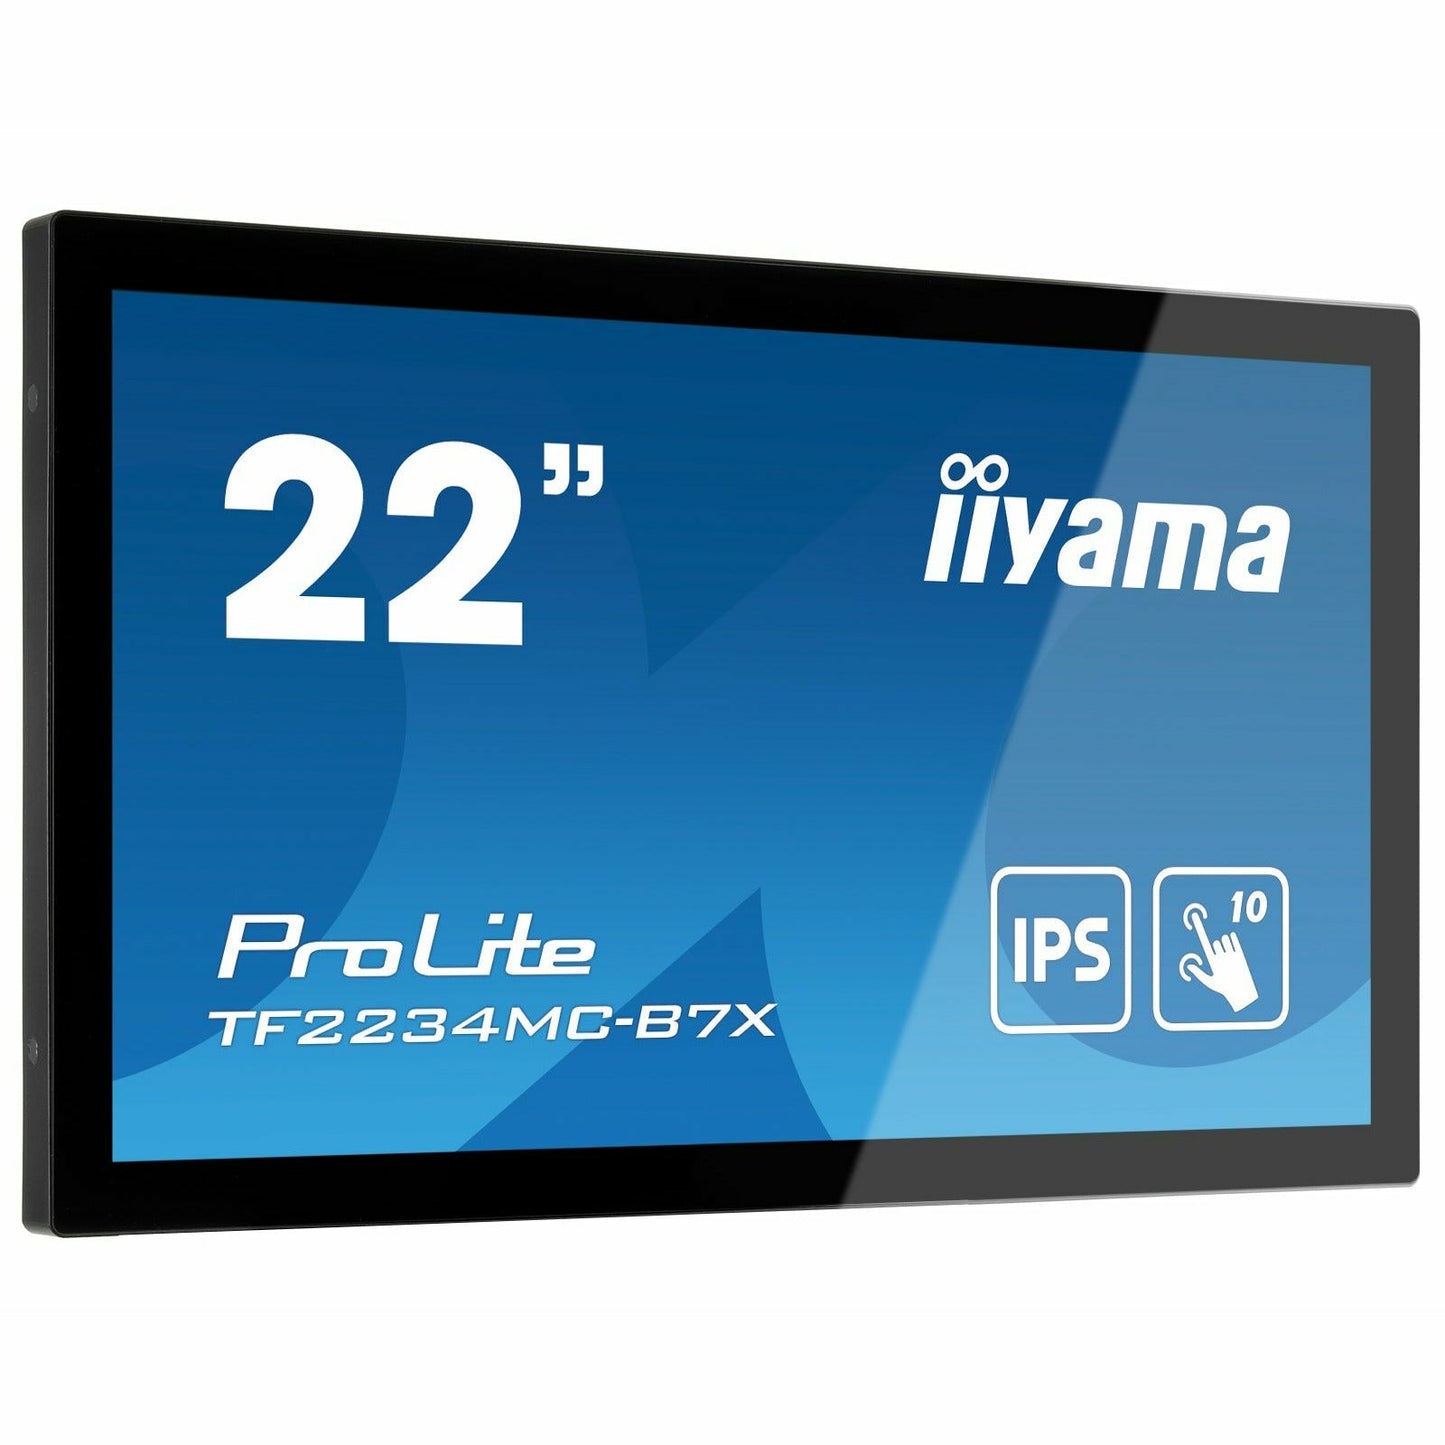 Steel Blue iiyama ProLite TF2234MC-B7AGB 22" Capacitive Touch Screen IPS Display